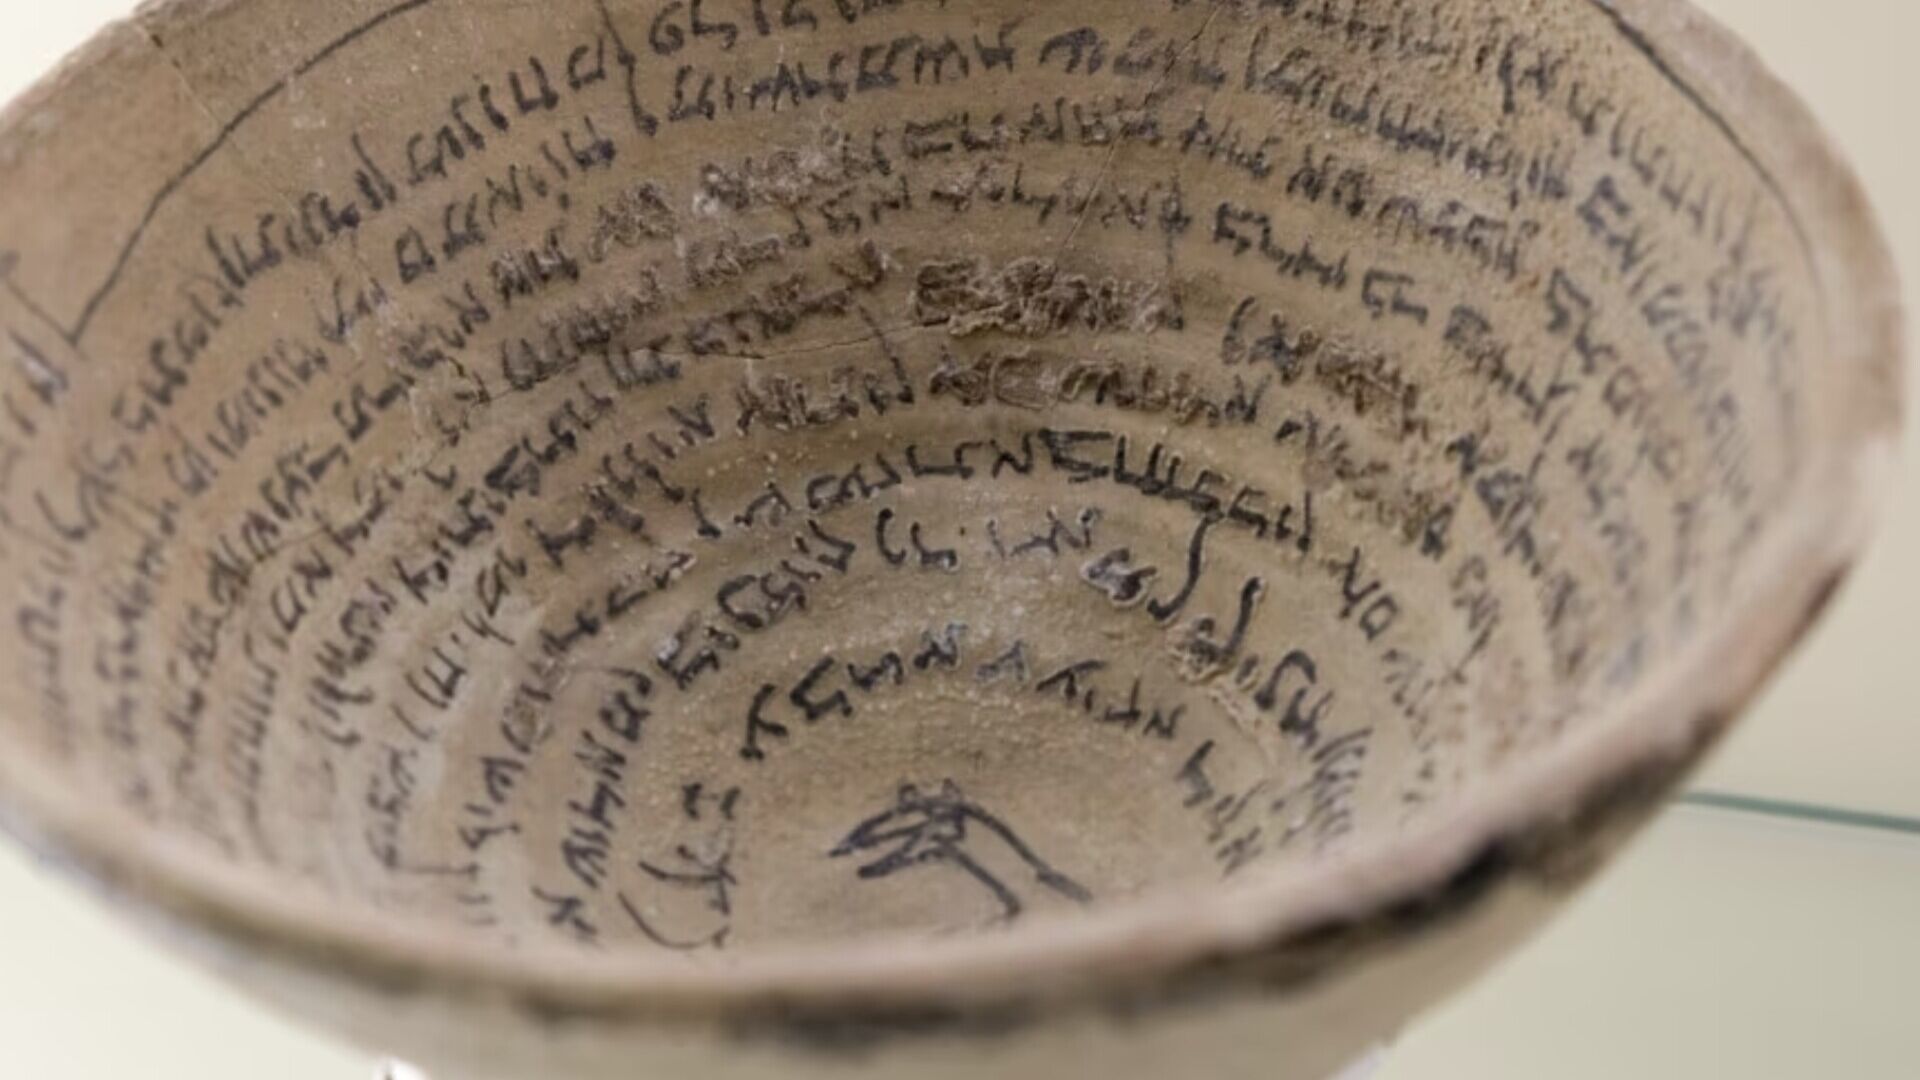 Cuneiforme: una rappresentazione della scrittura cuneiforme su un vaso accadico